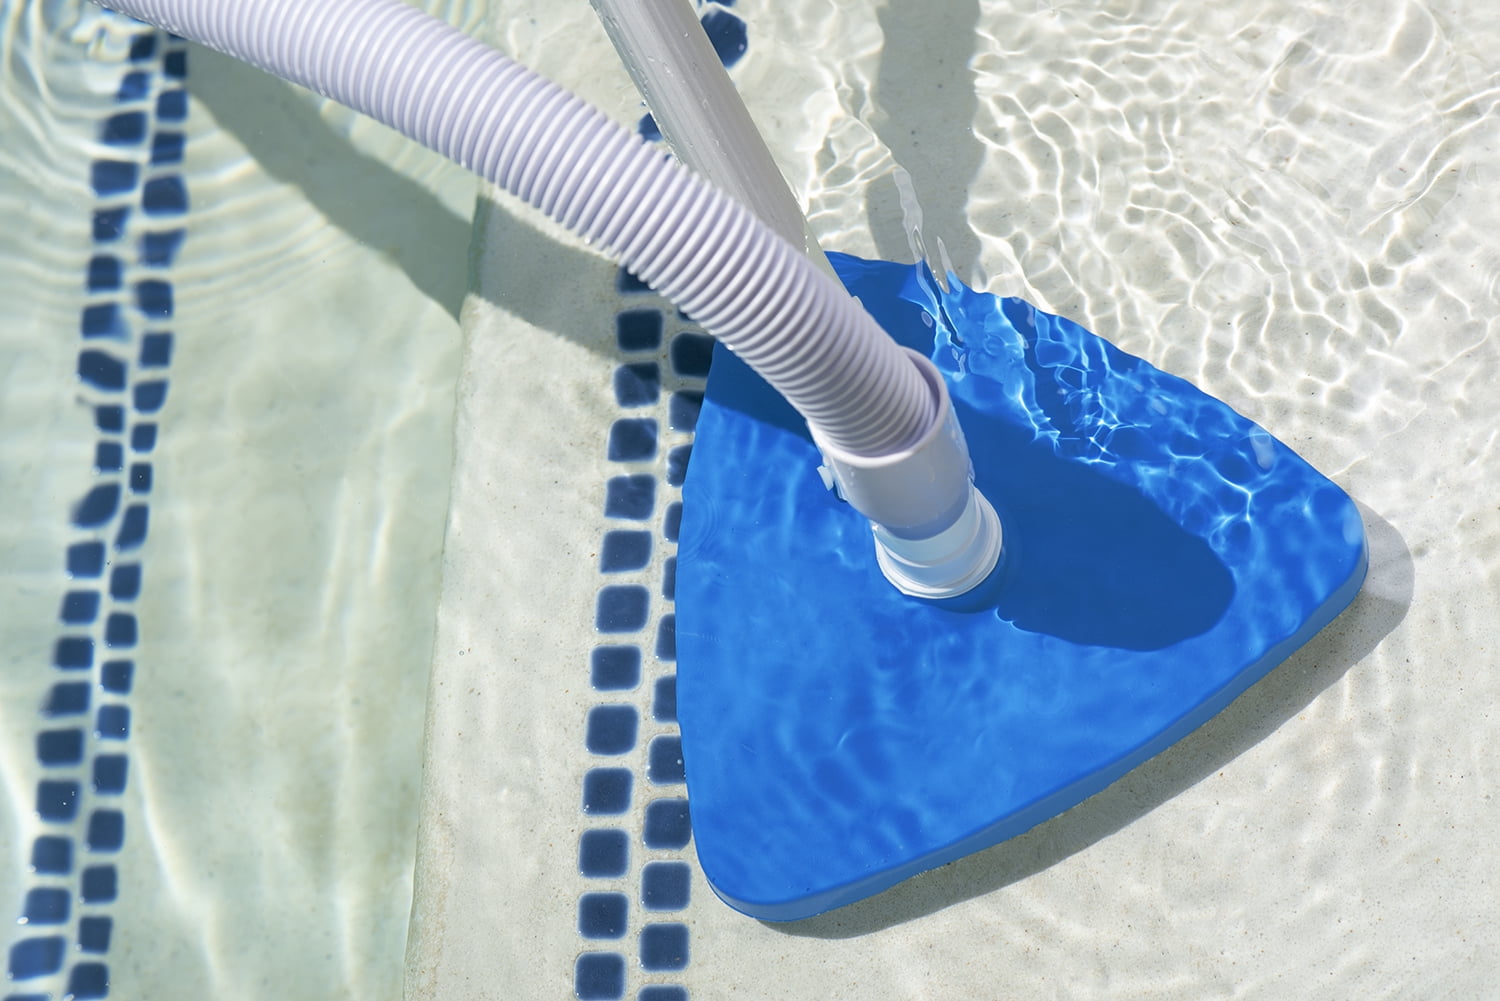 Poolmaster/Swimline Clear Triangular Vinyl Replacement Swimming Pool Vacuum Head 